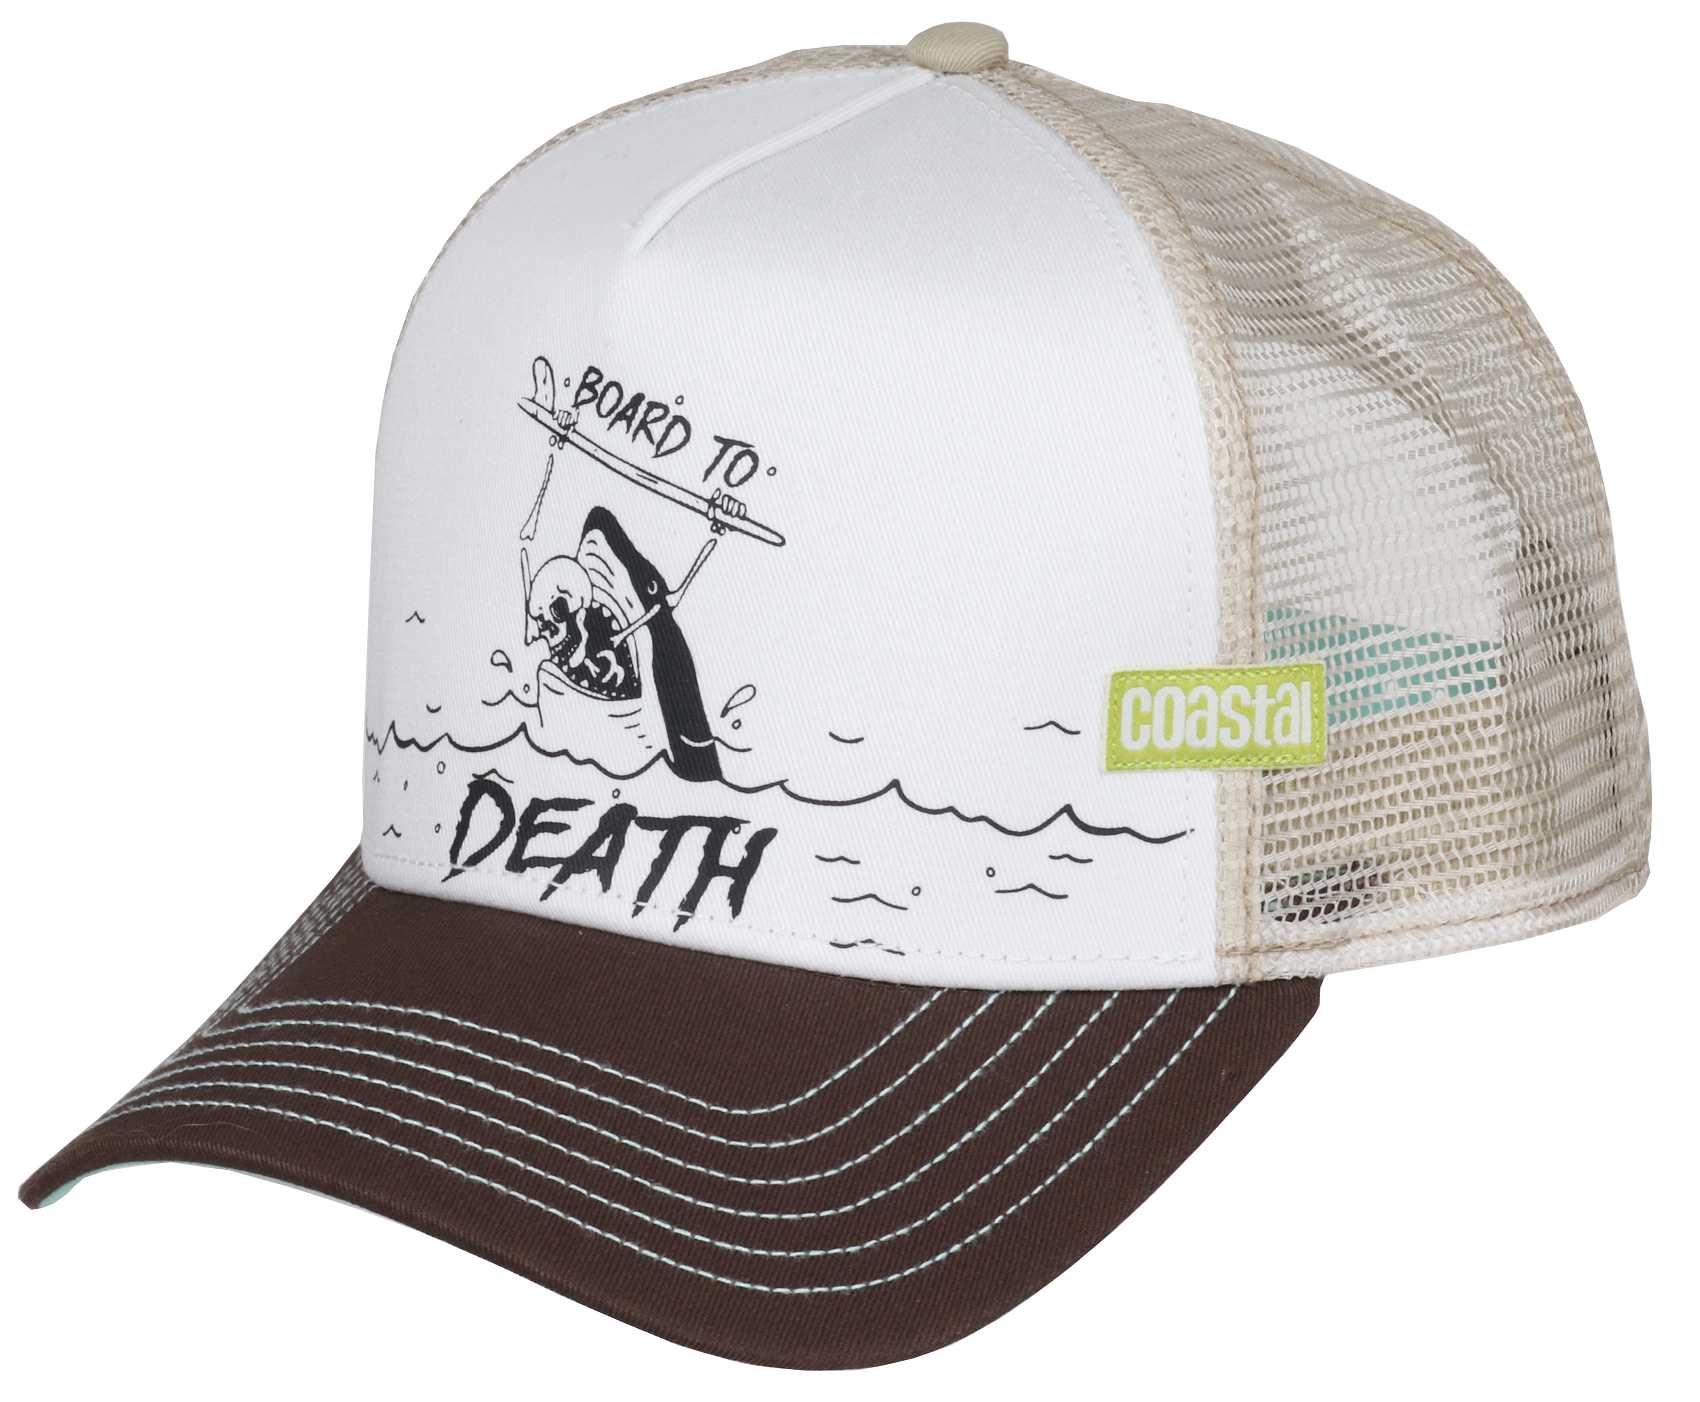 Board to Death Trucker Cap Coastal 